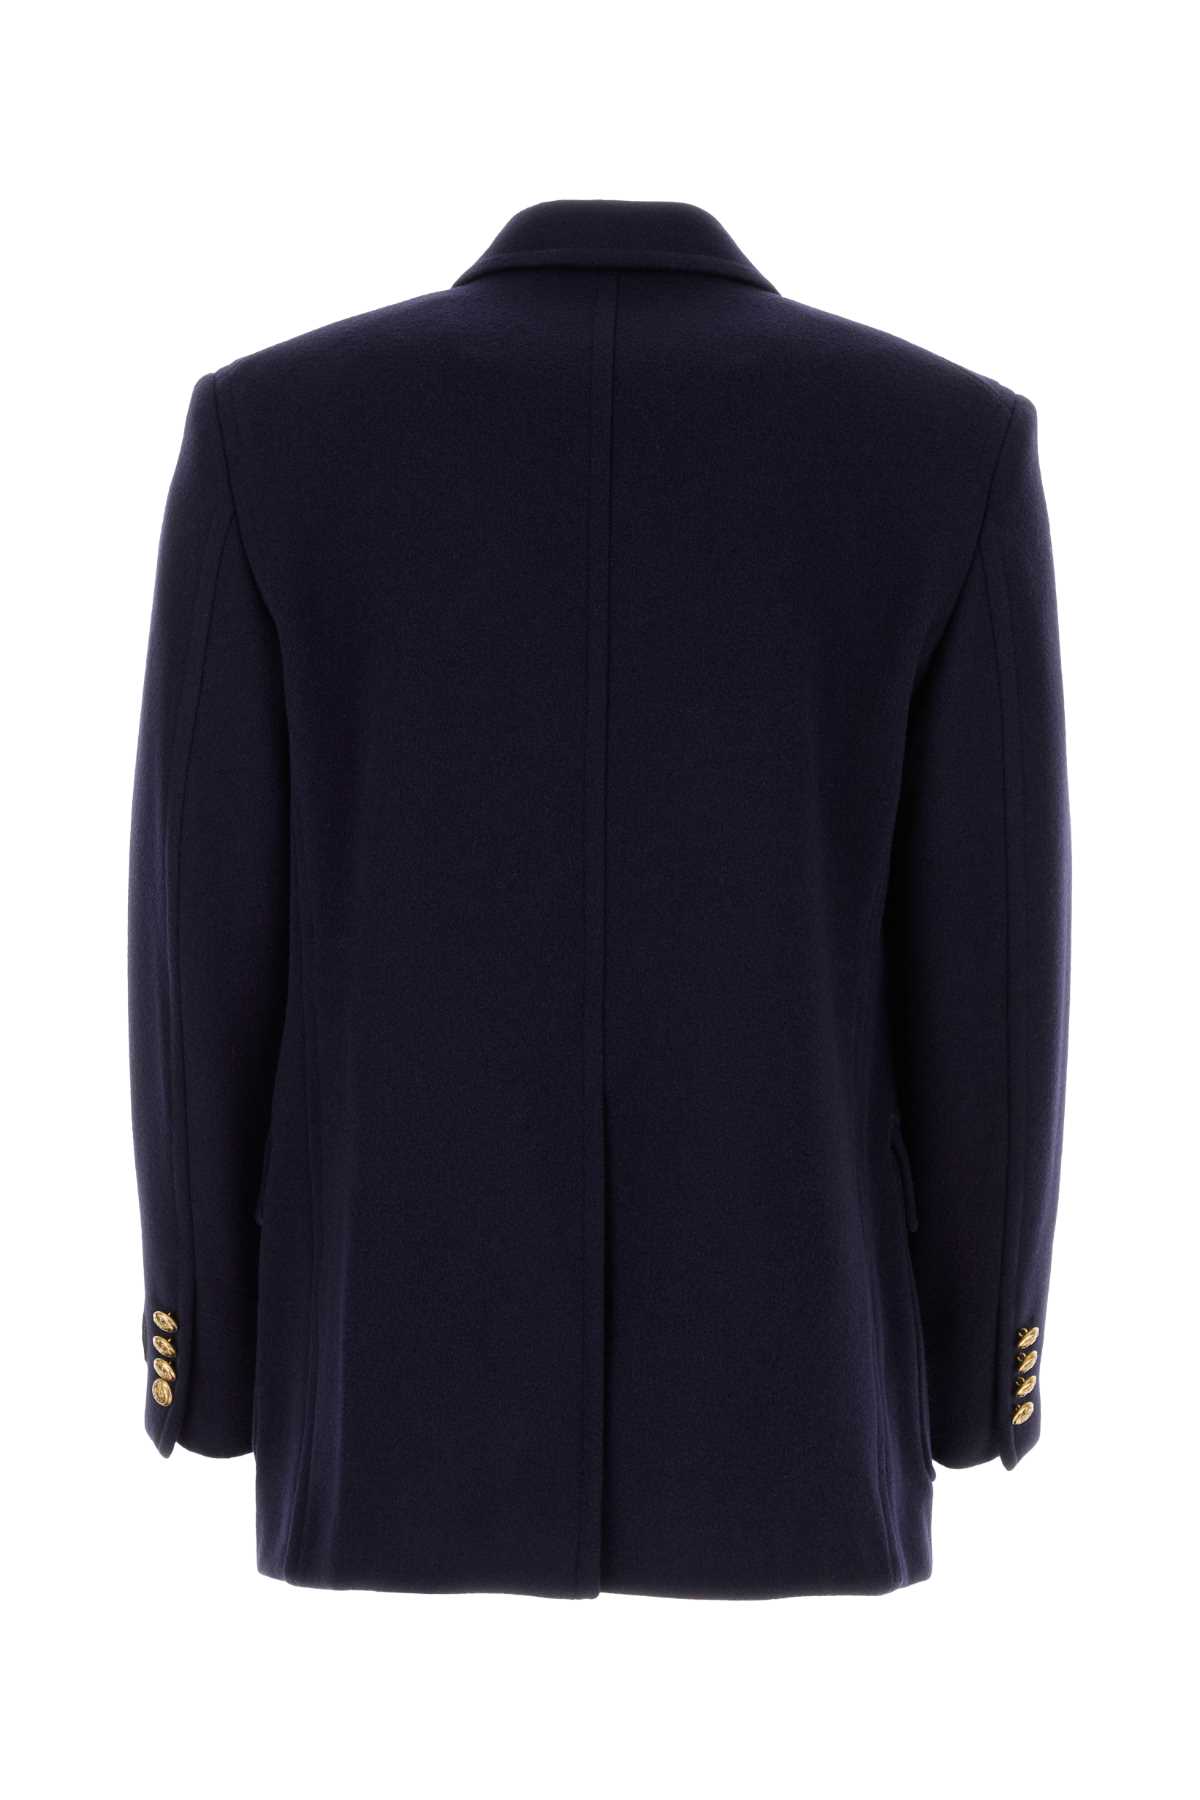 Gucci Navy Blue Wool Coat In Bracknell